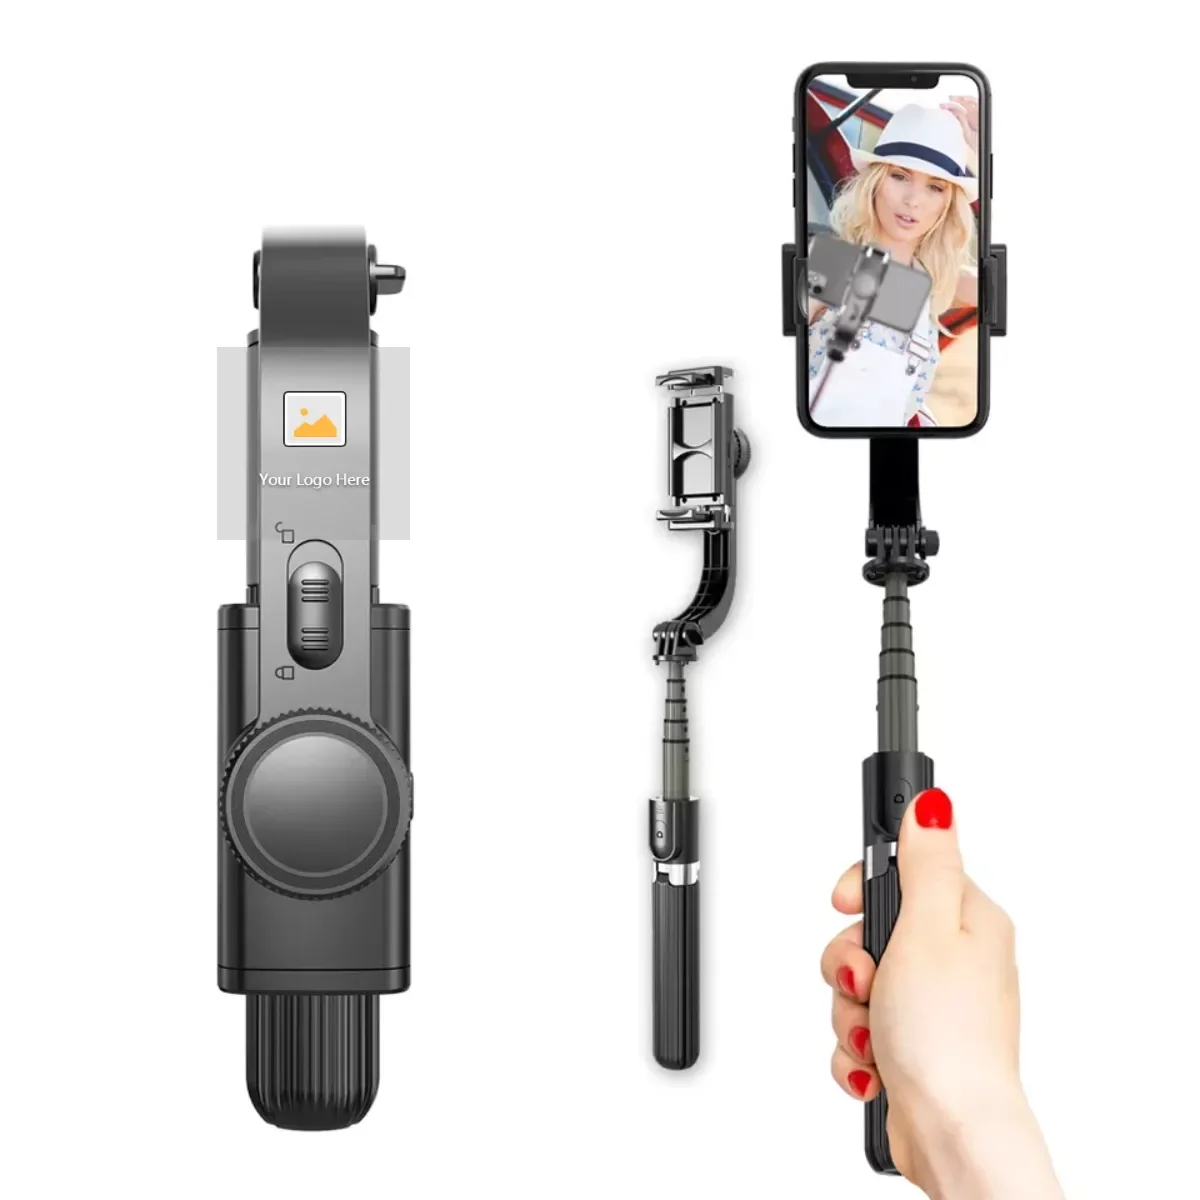 

Hot sale 360 rotation tripod anti shake selfie Video stabilizer smartphone axis handheld selfie stick gimbal stabilizer